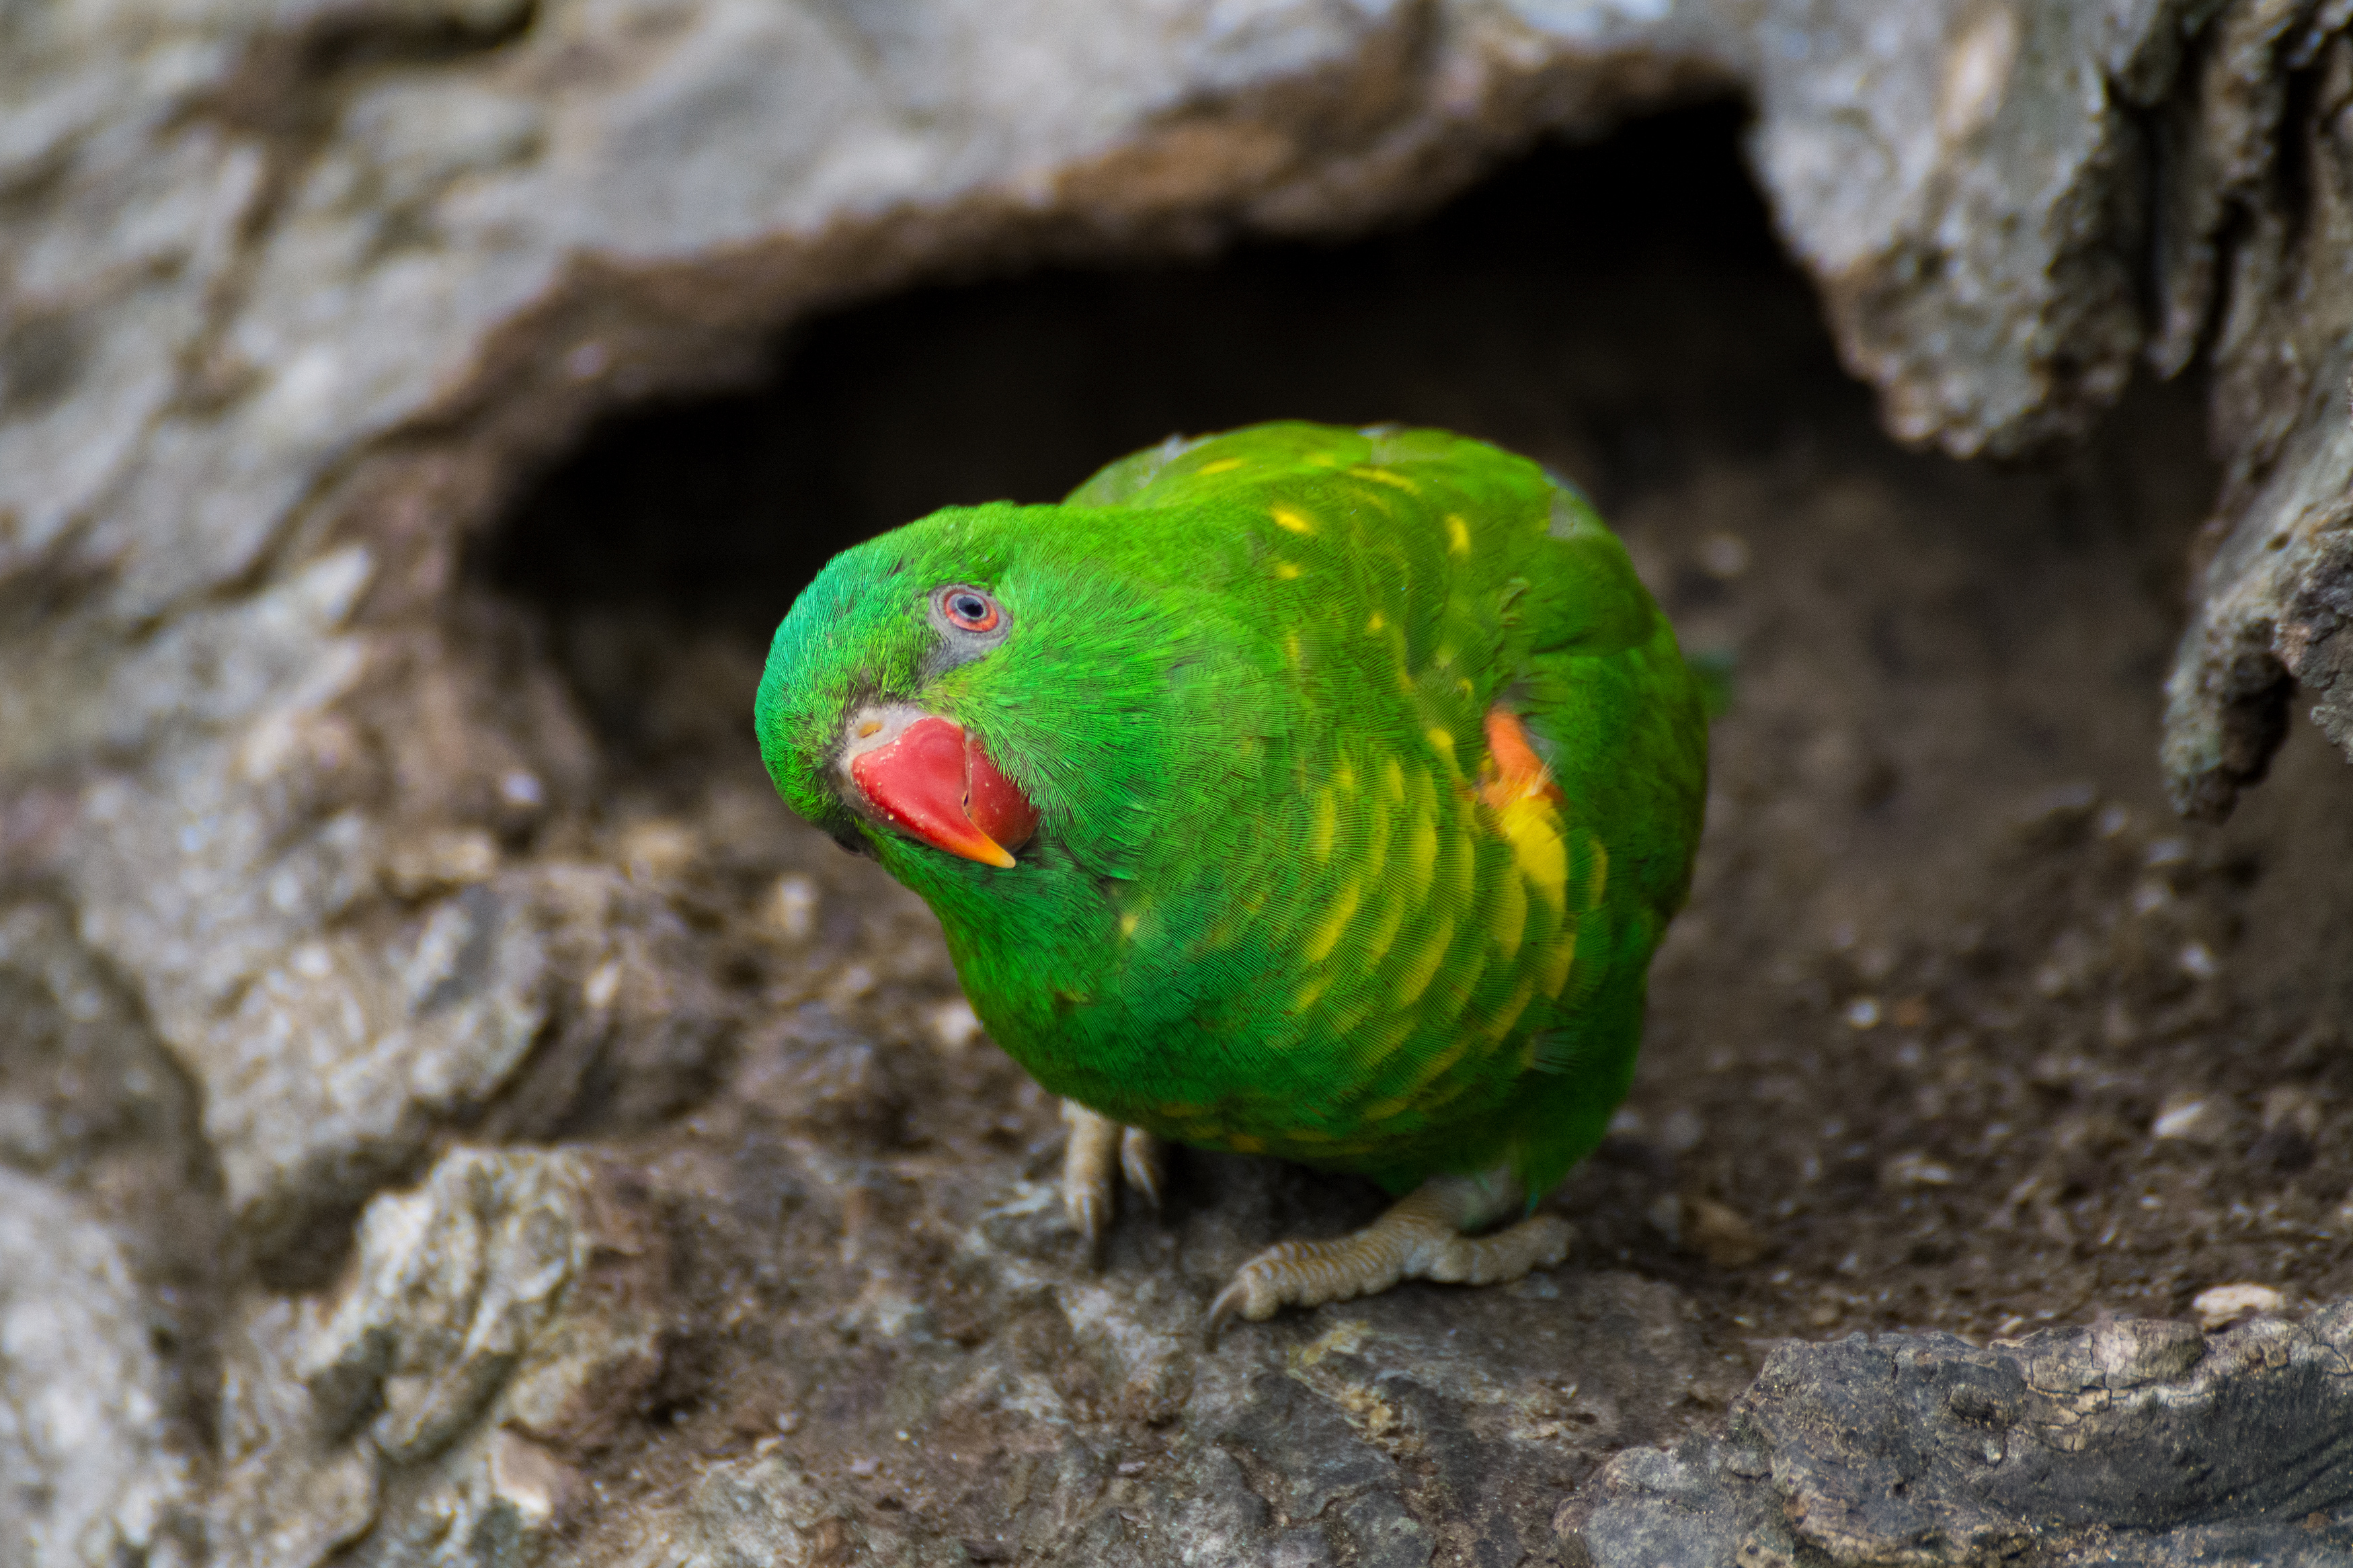 Free Image: Green Parrot With Orange Beak | Libreshot Public Domain ...